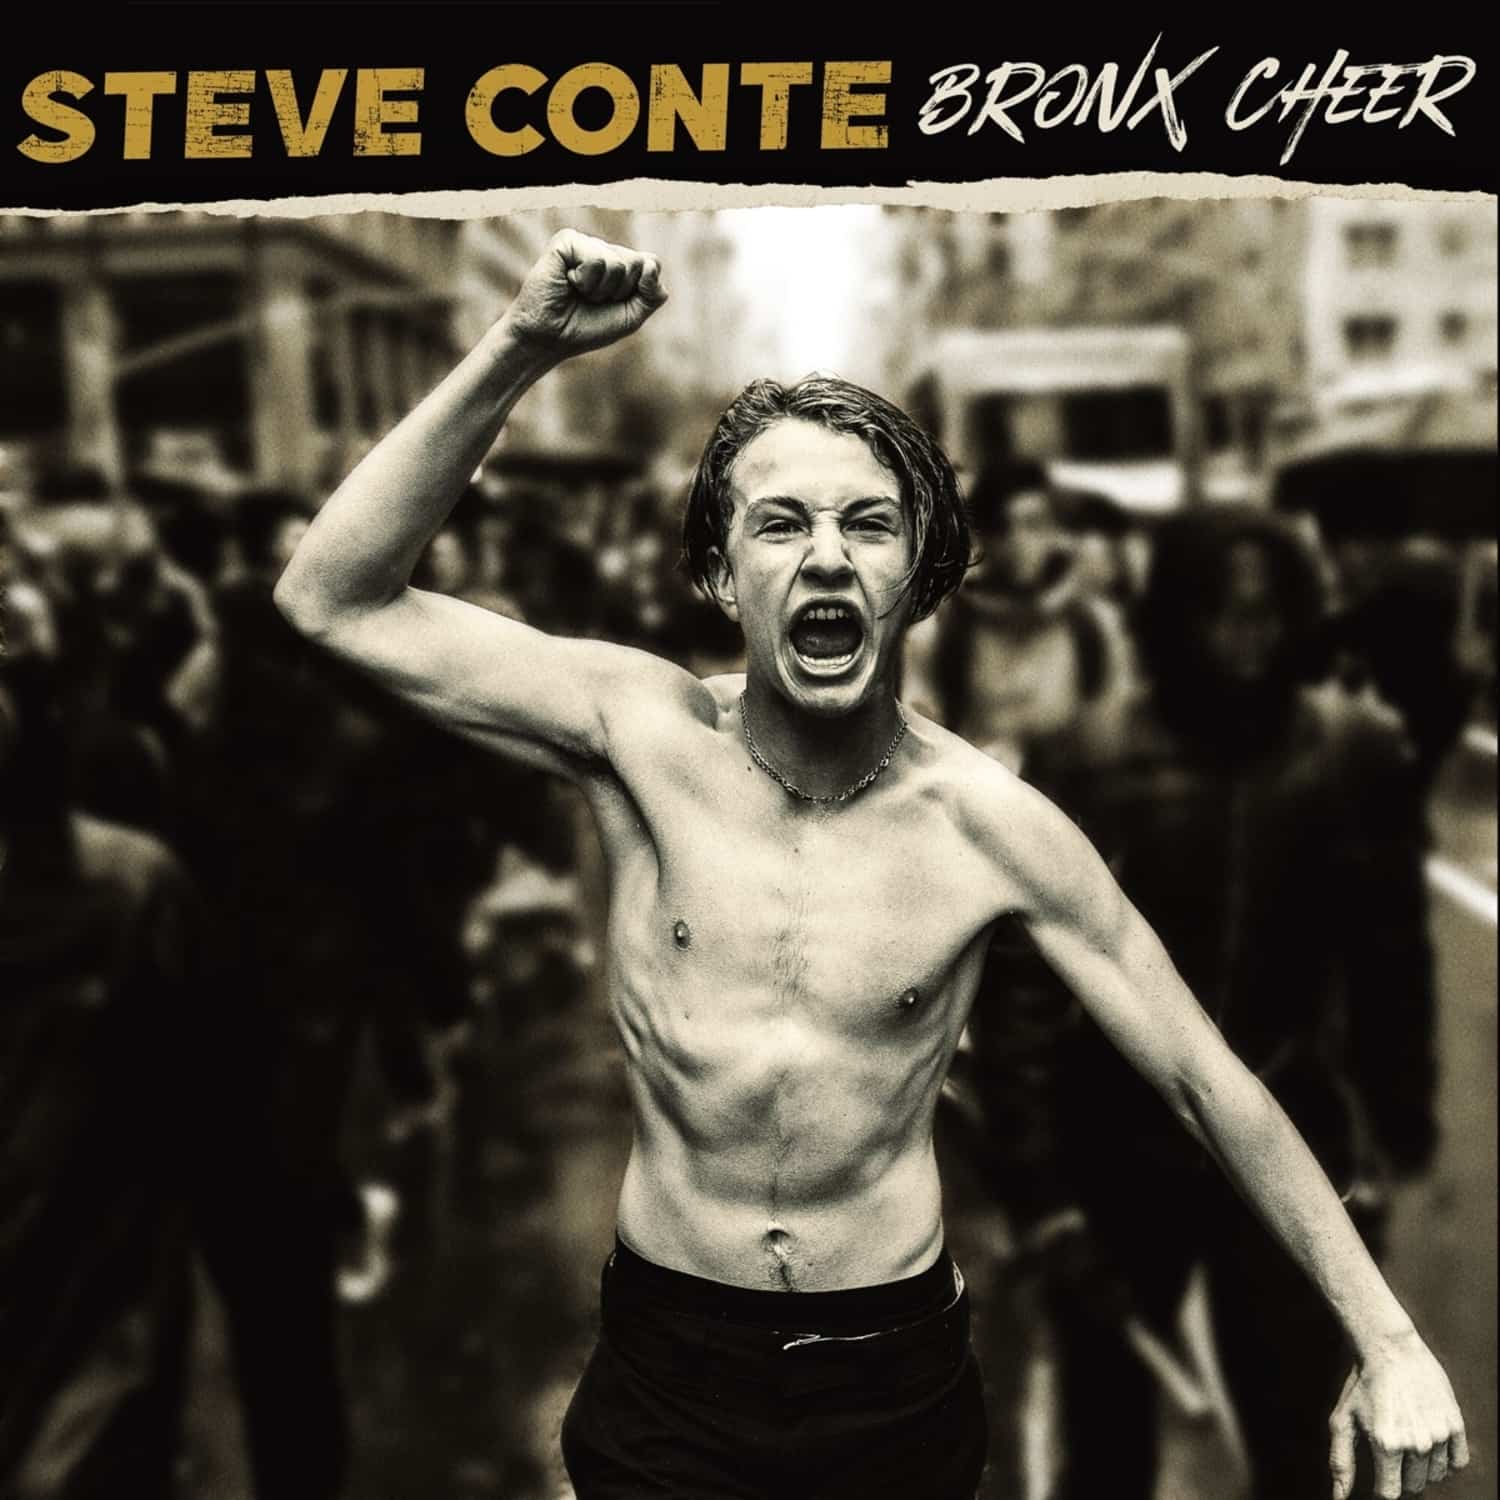  Steve Conte - BRONX CHEER 